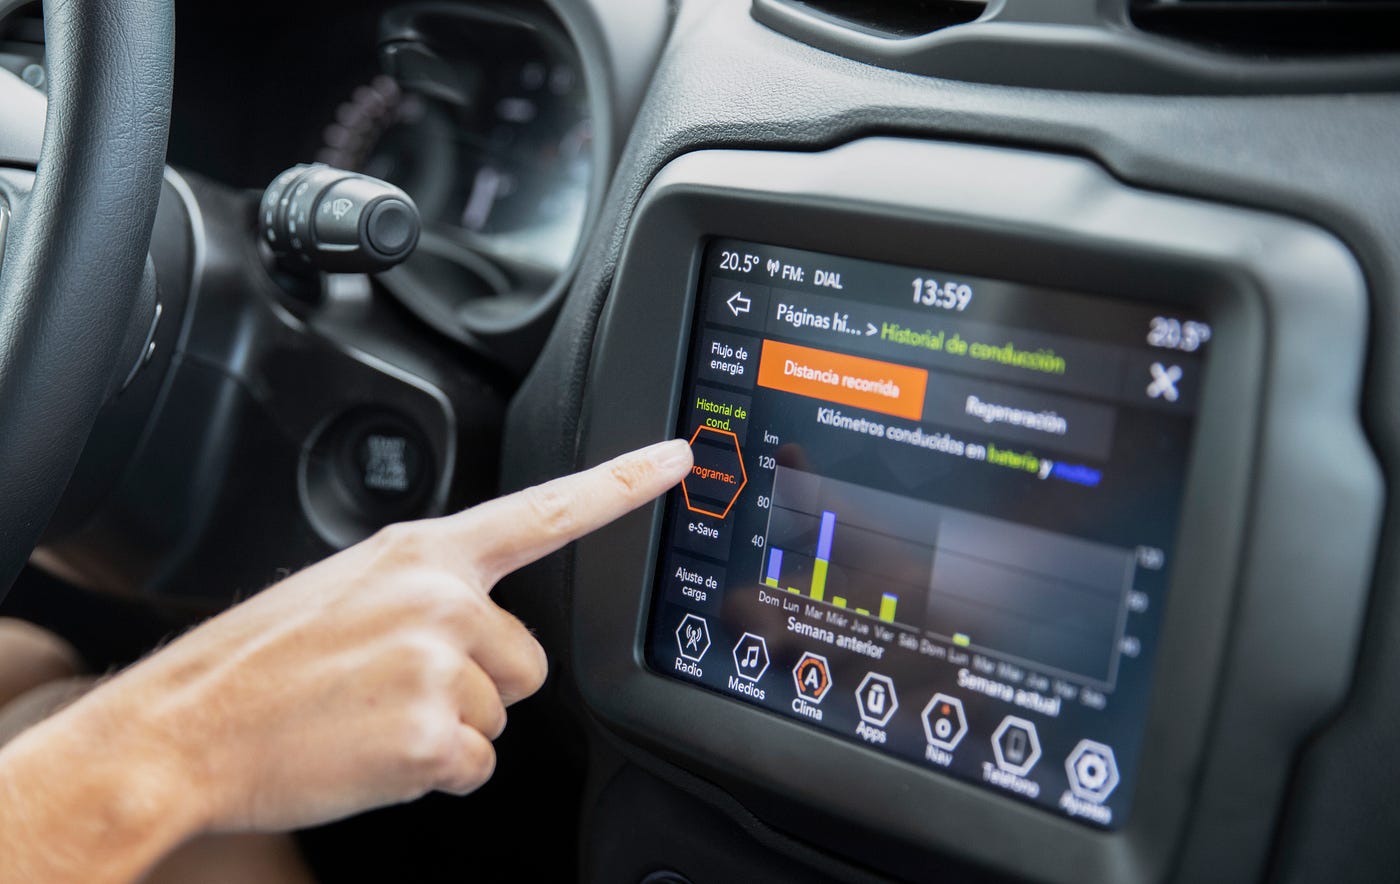 An analysis of car touchscreen infotainment systems